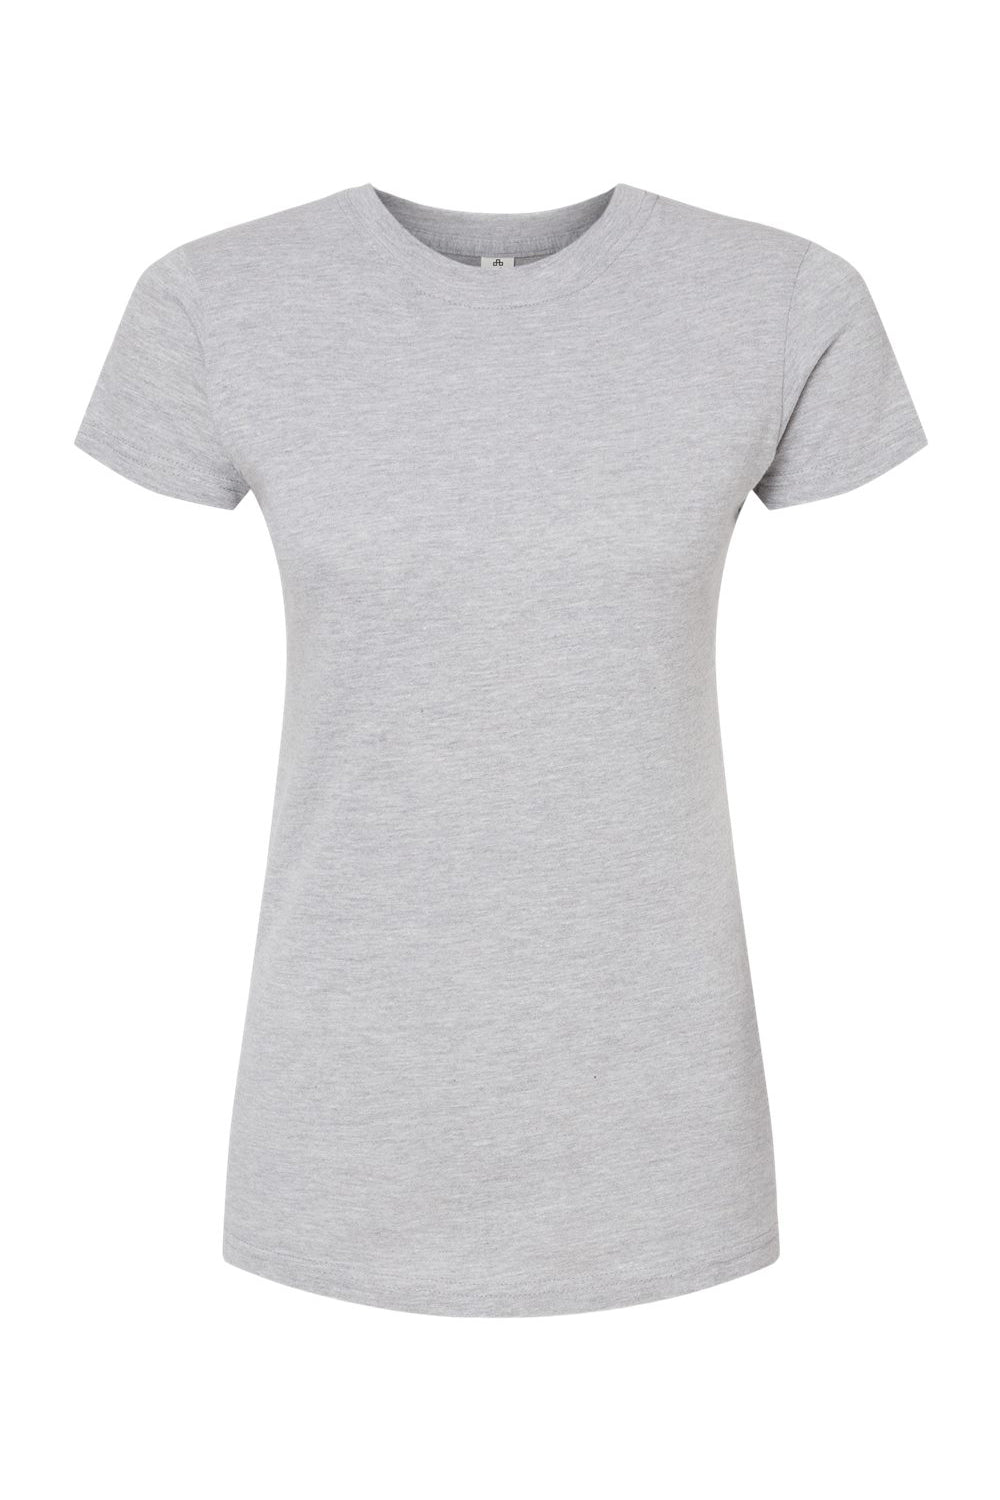 Tultex 213 Womens Fine Jersey Slim Fit Short Sleeve Crewneck T-Shirt Heather Grey Flat Front